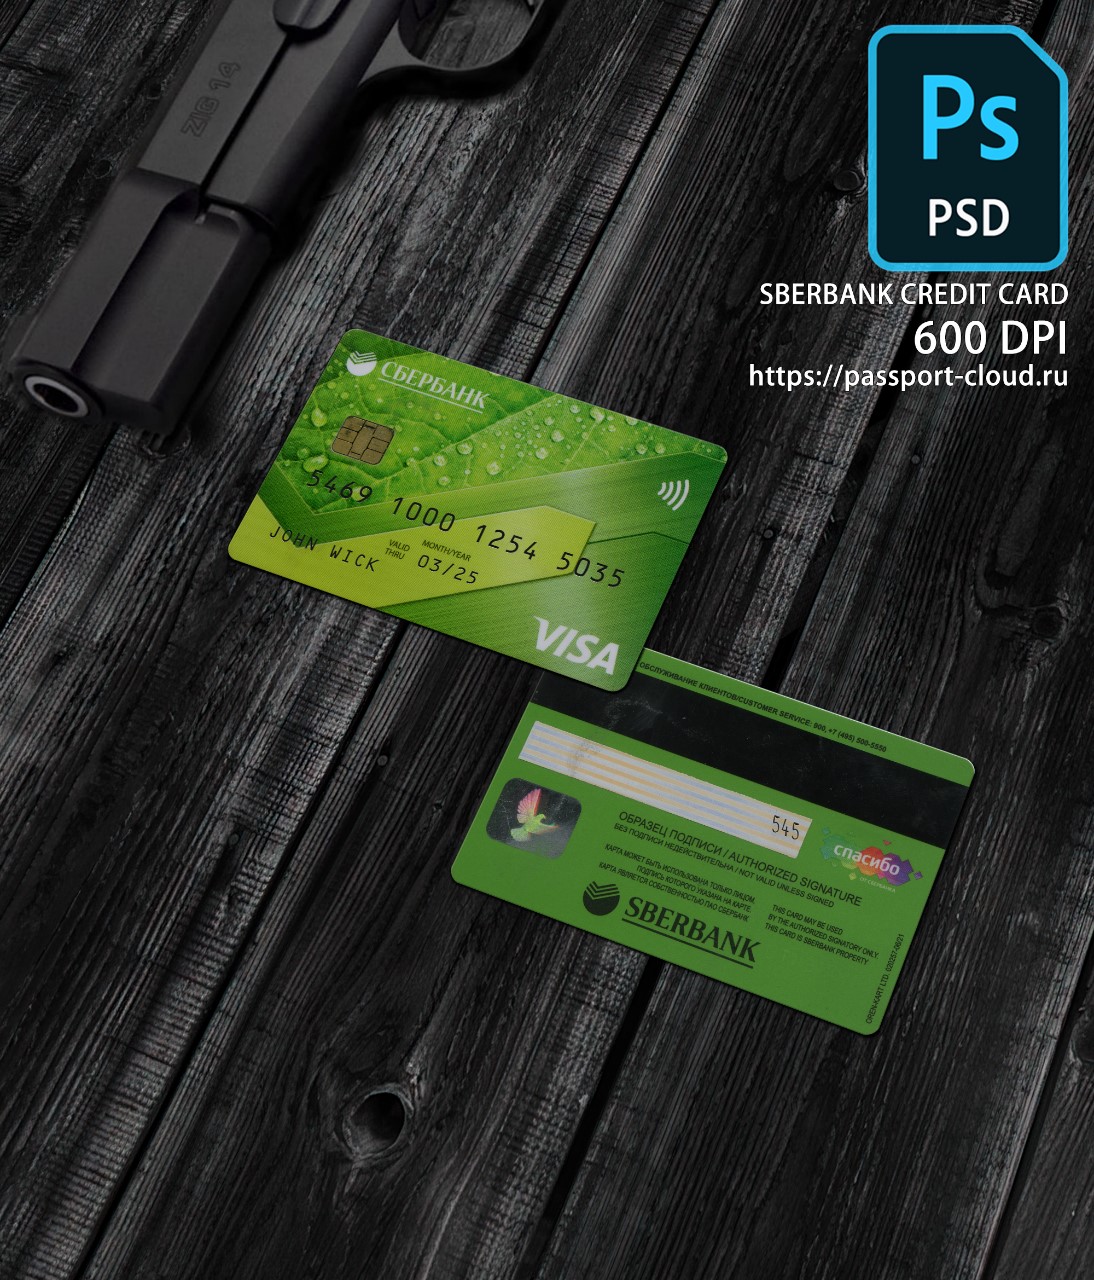 Sberbank Credit Card PSD 1